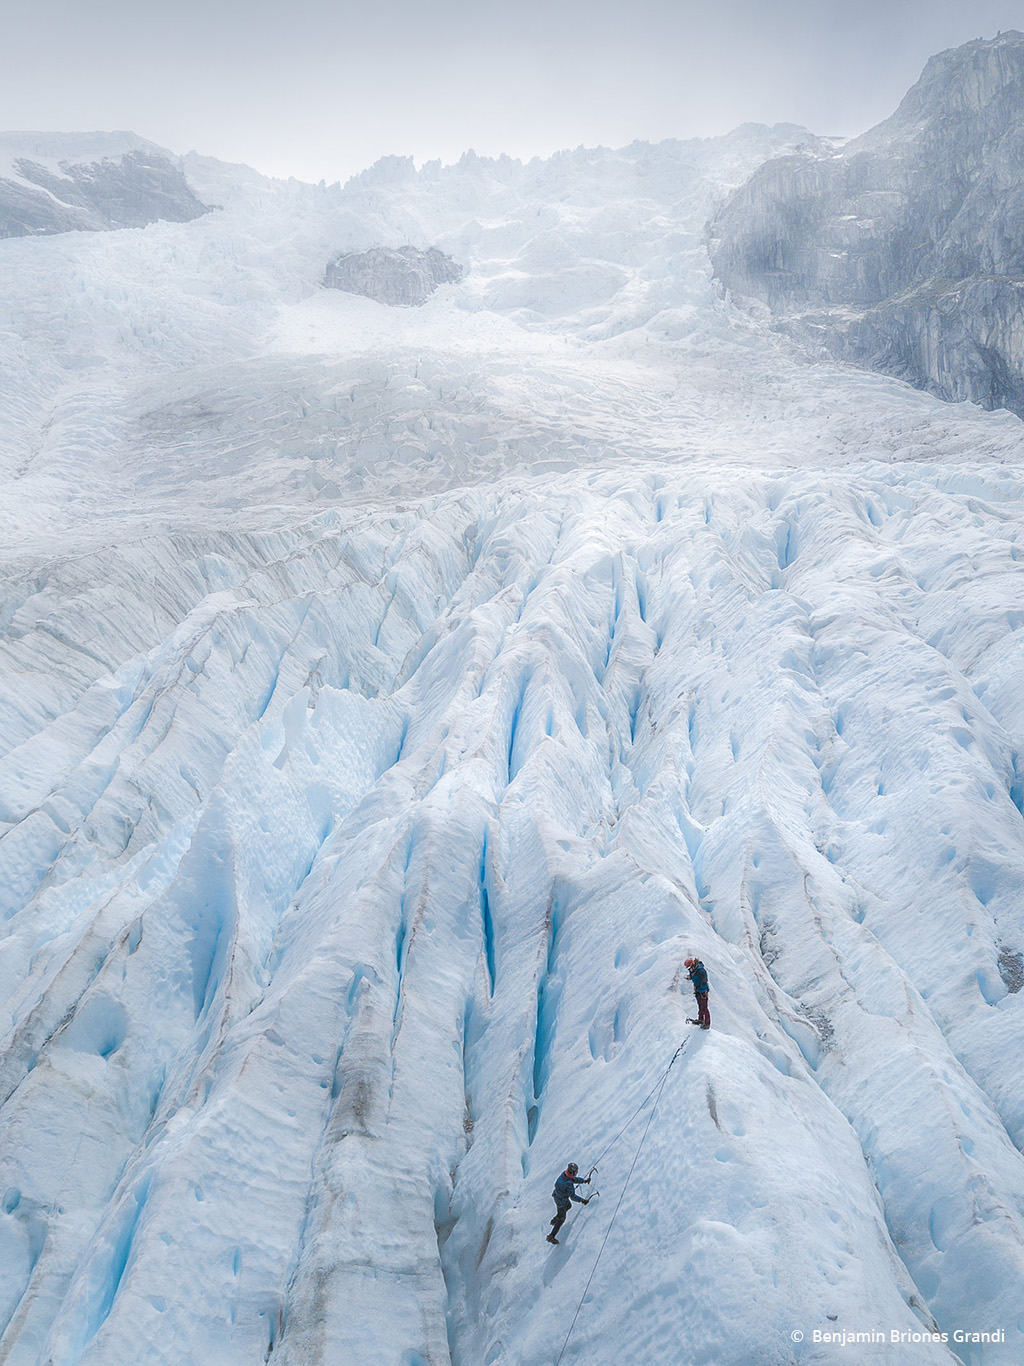 Today’s Photo Of The Day is “Glacier Climbing” by Briones Grandi. Location: Leones Glacier, Coyhaique, Chile.